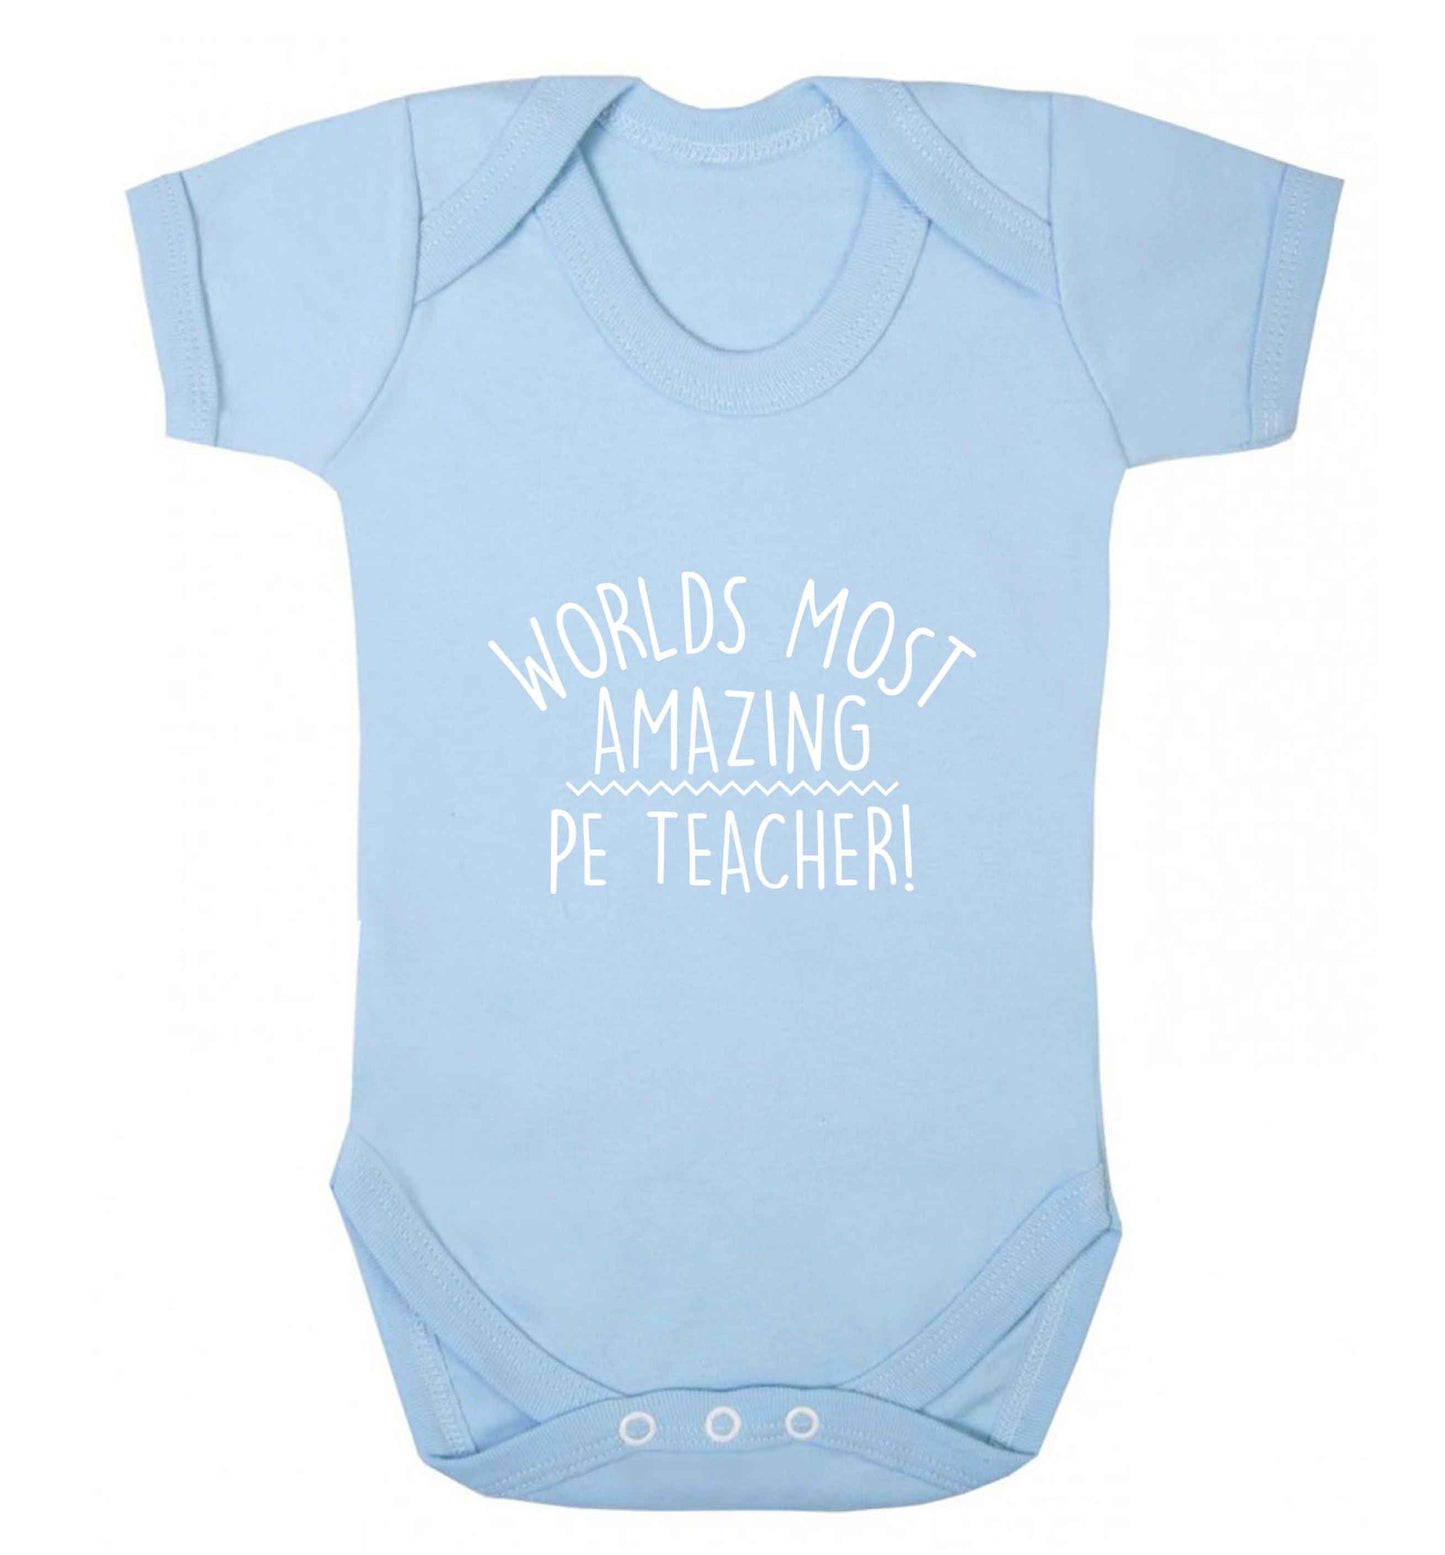 Worlds most amazing PE teacher baby vest pale blue 18-24 months